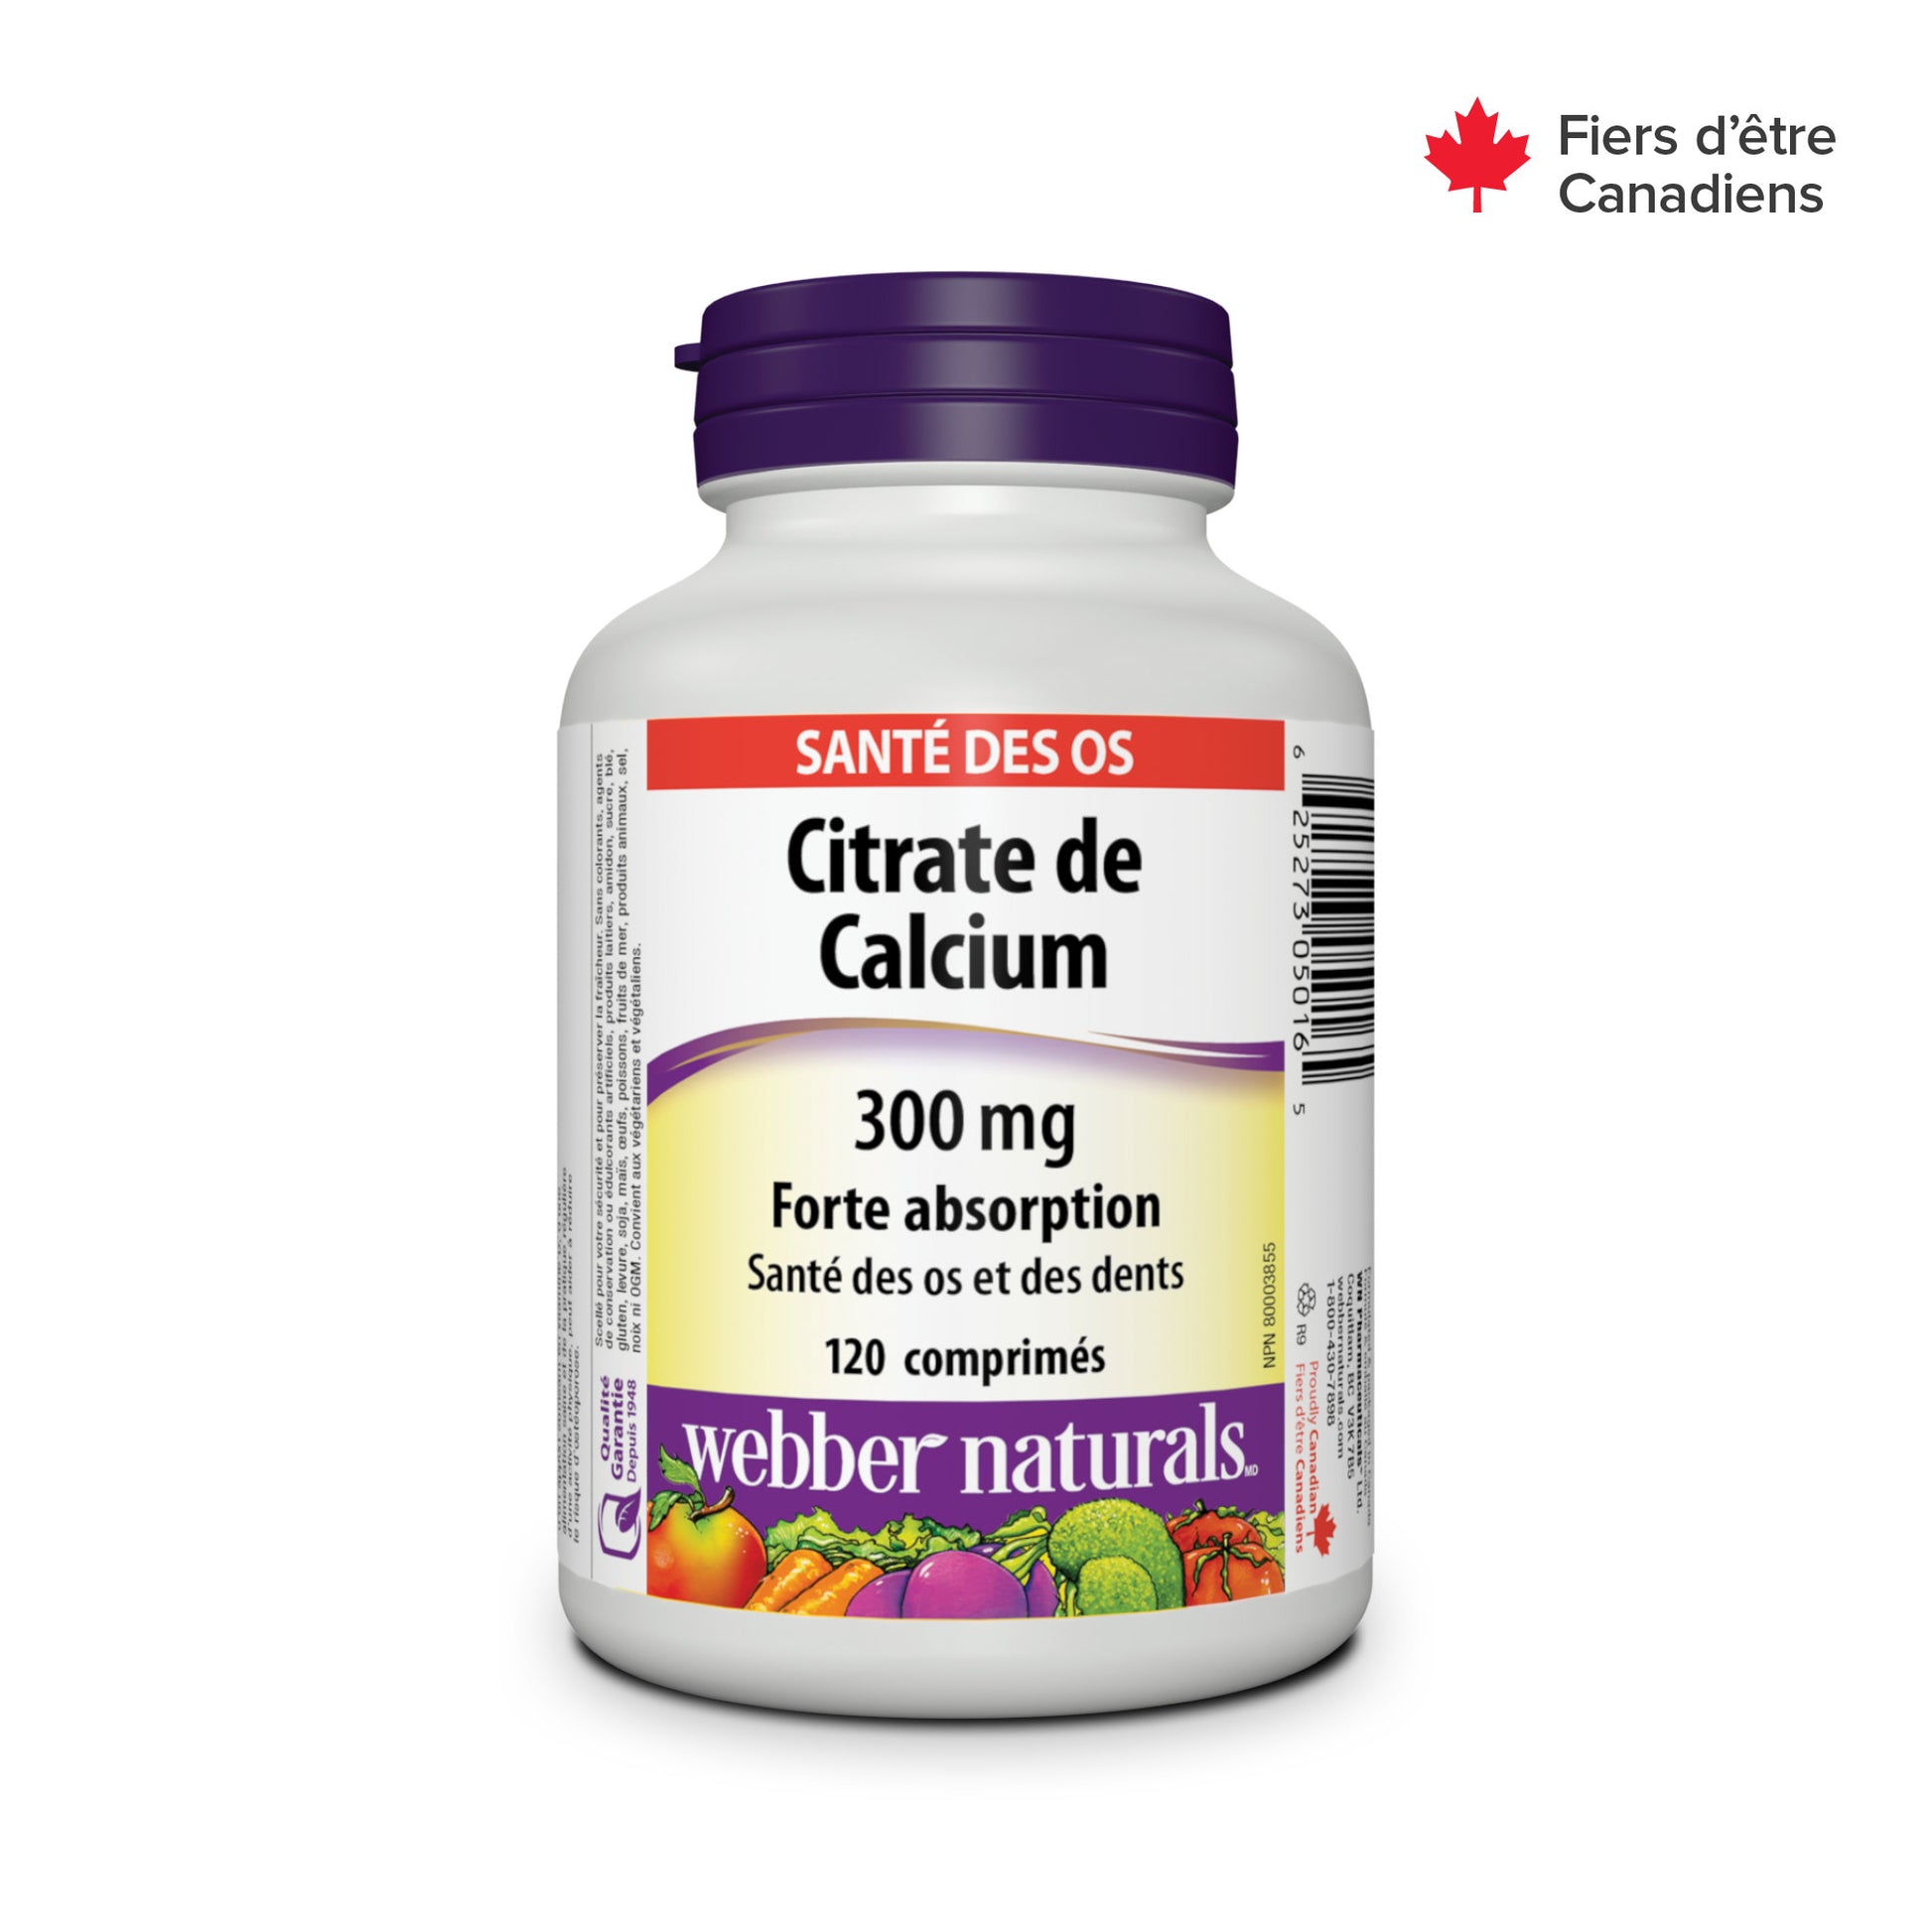 Citrate de Calcium Forte absorption 300 mg for Webber Naturals|v|hi-res|WN5016